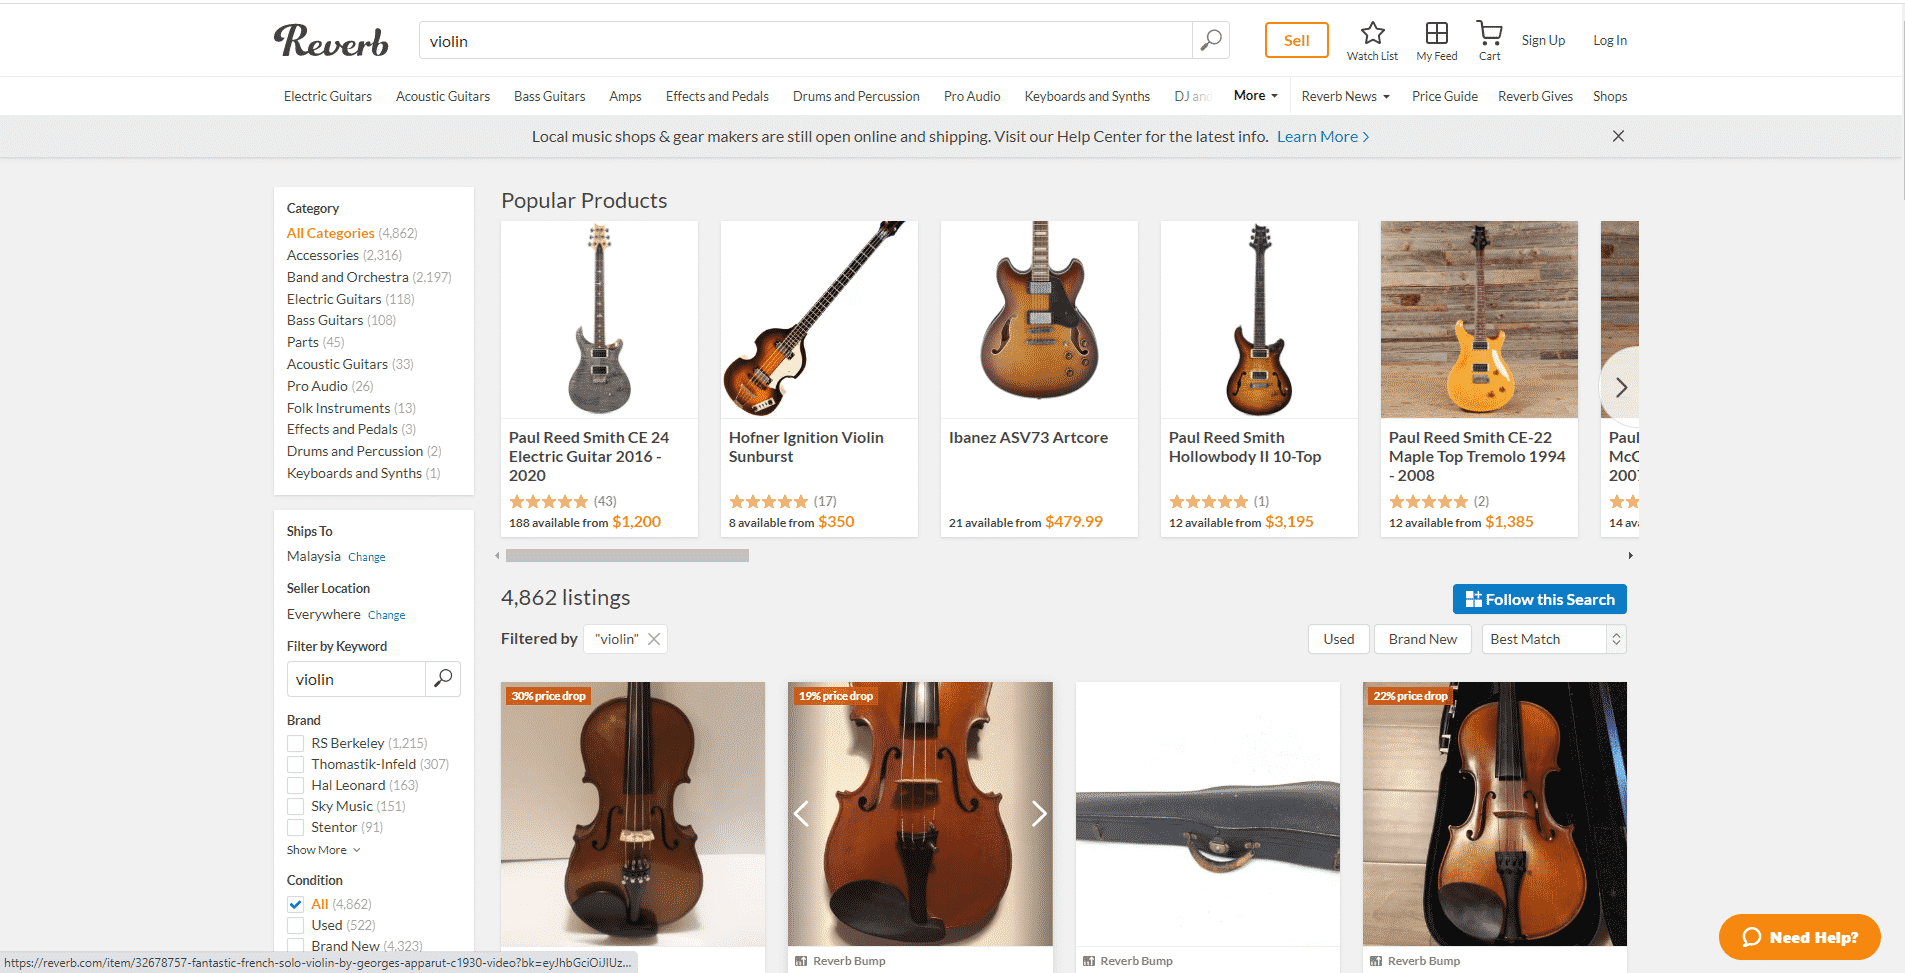 Reverb violins buy violin online